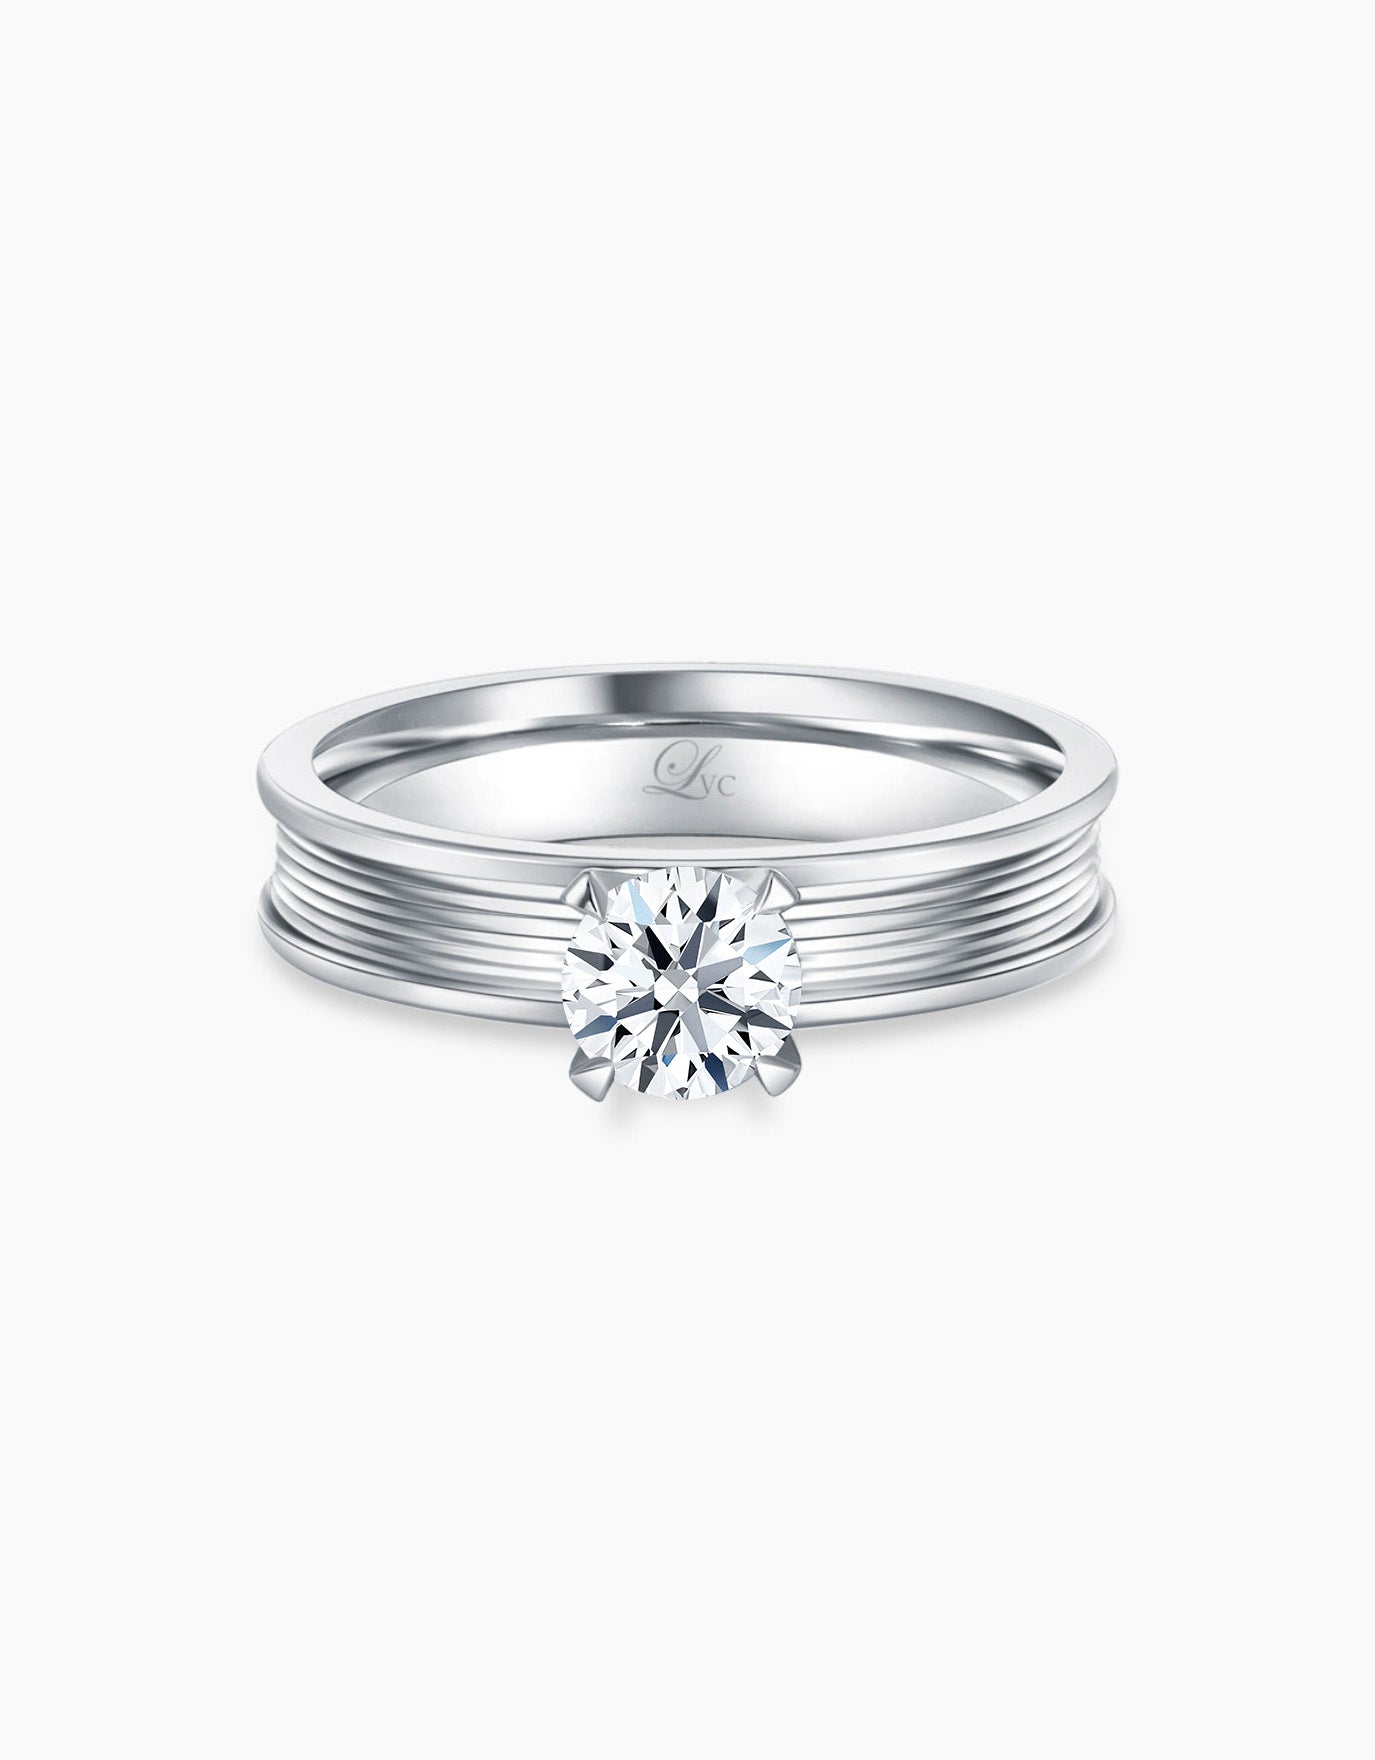 LVC Precieux Promise (Slim) Diamond Ring in 4 prongs